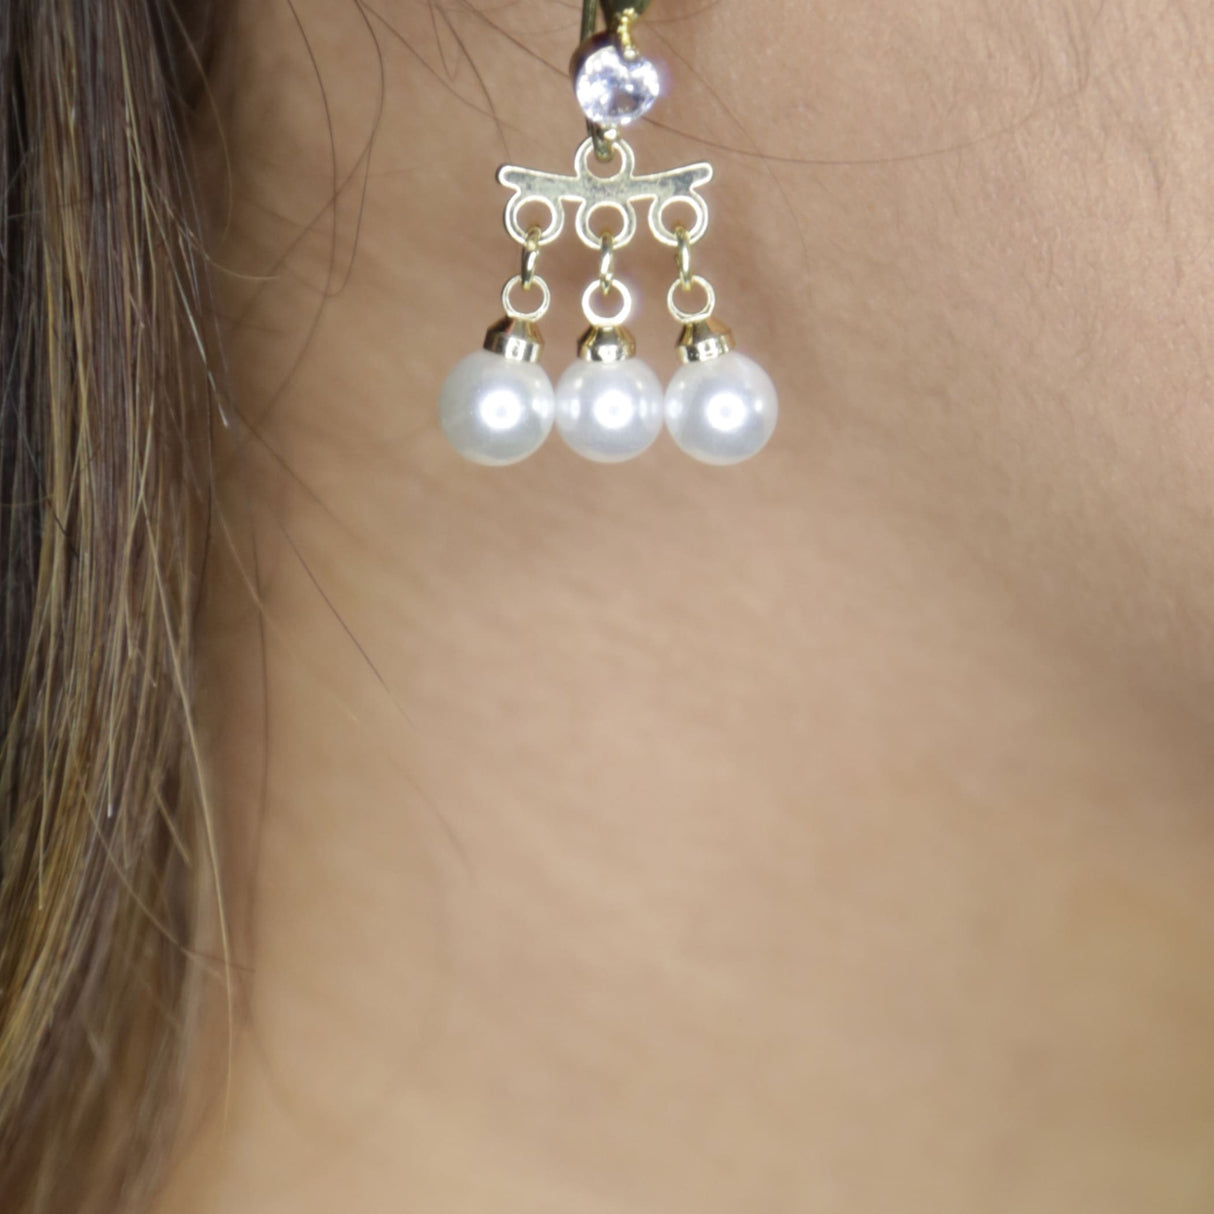 Dangle earrings for women indian ethnic jewelry jhumke gift